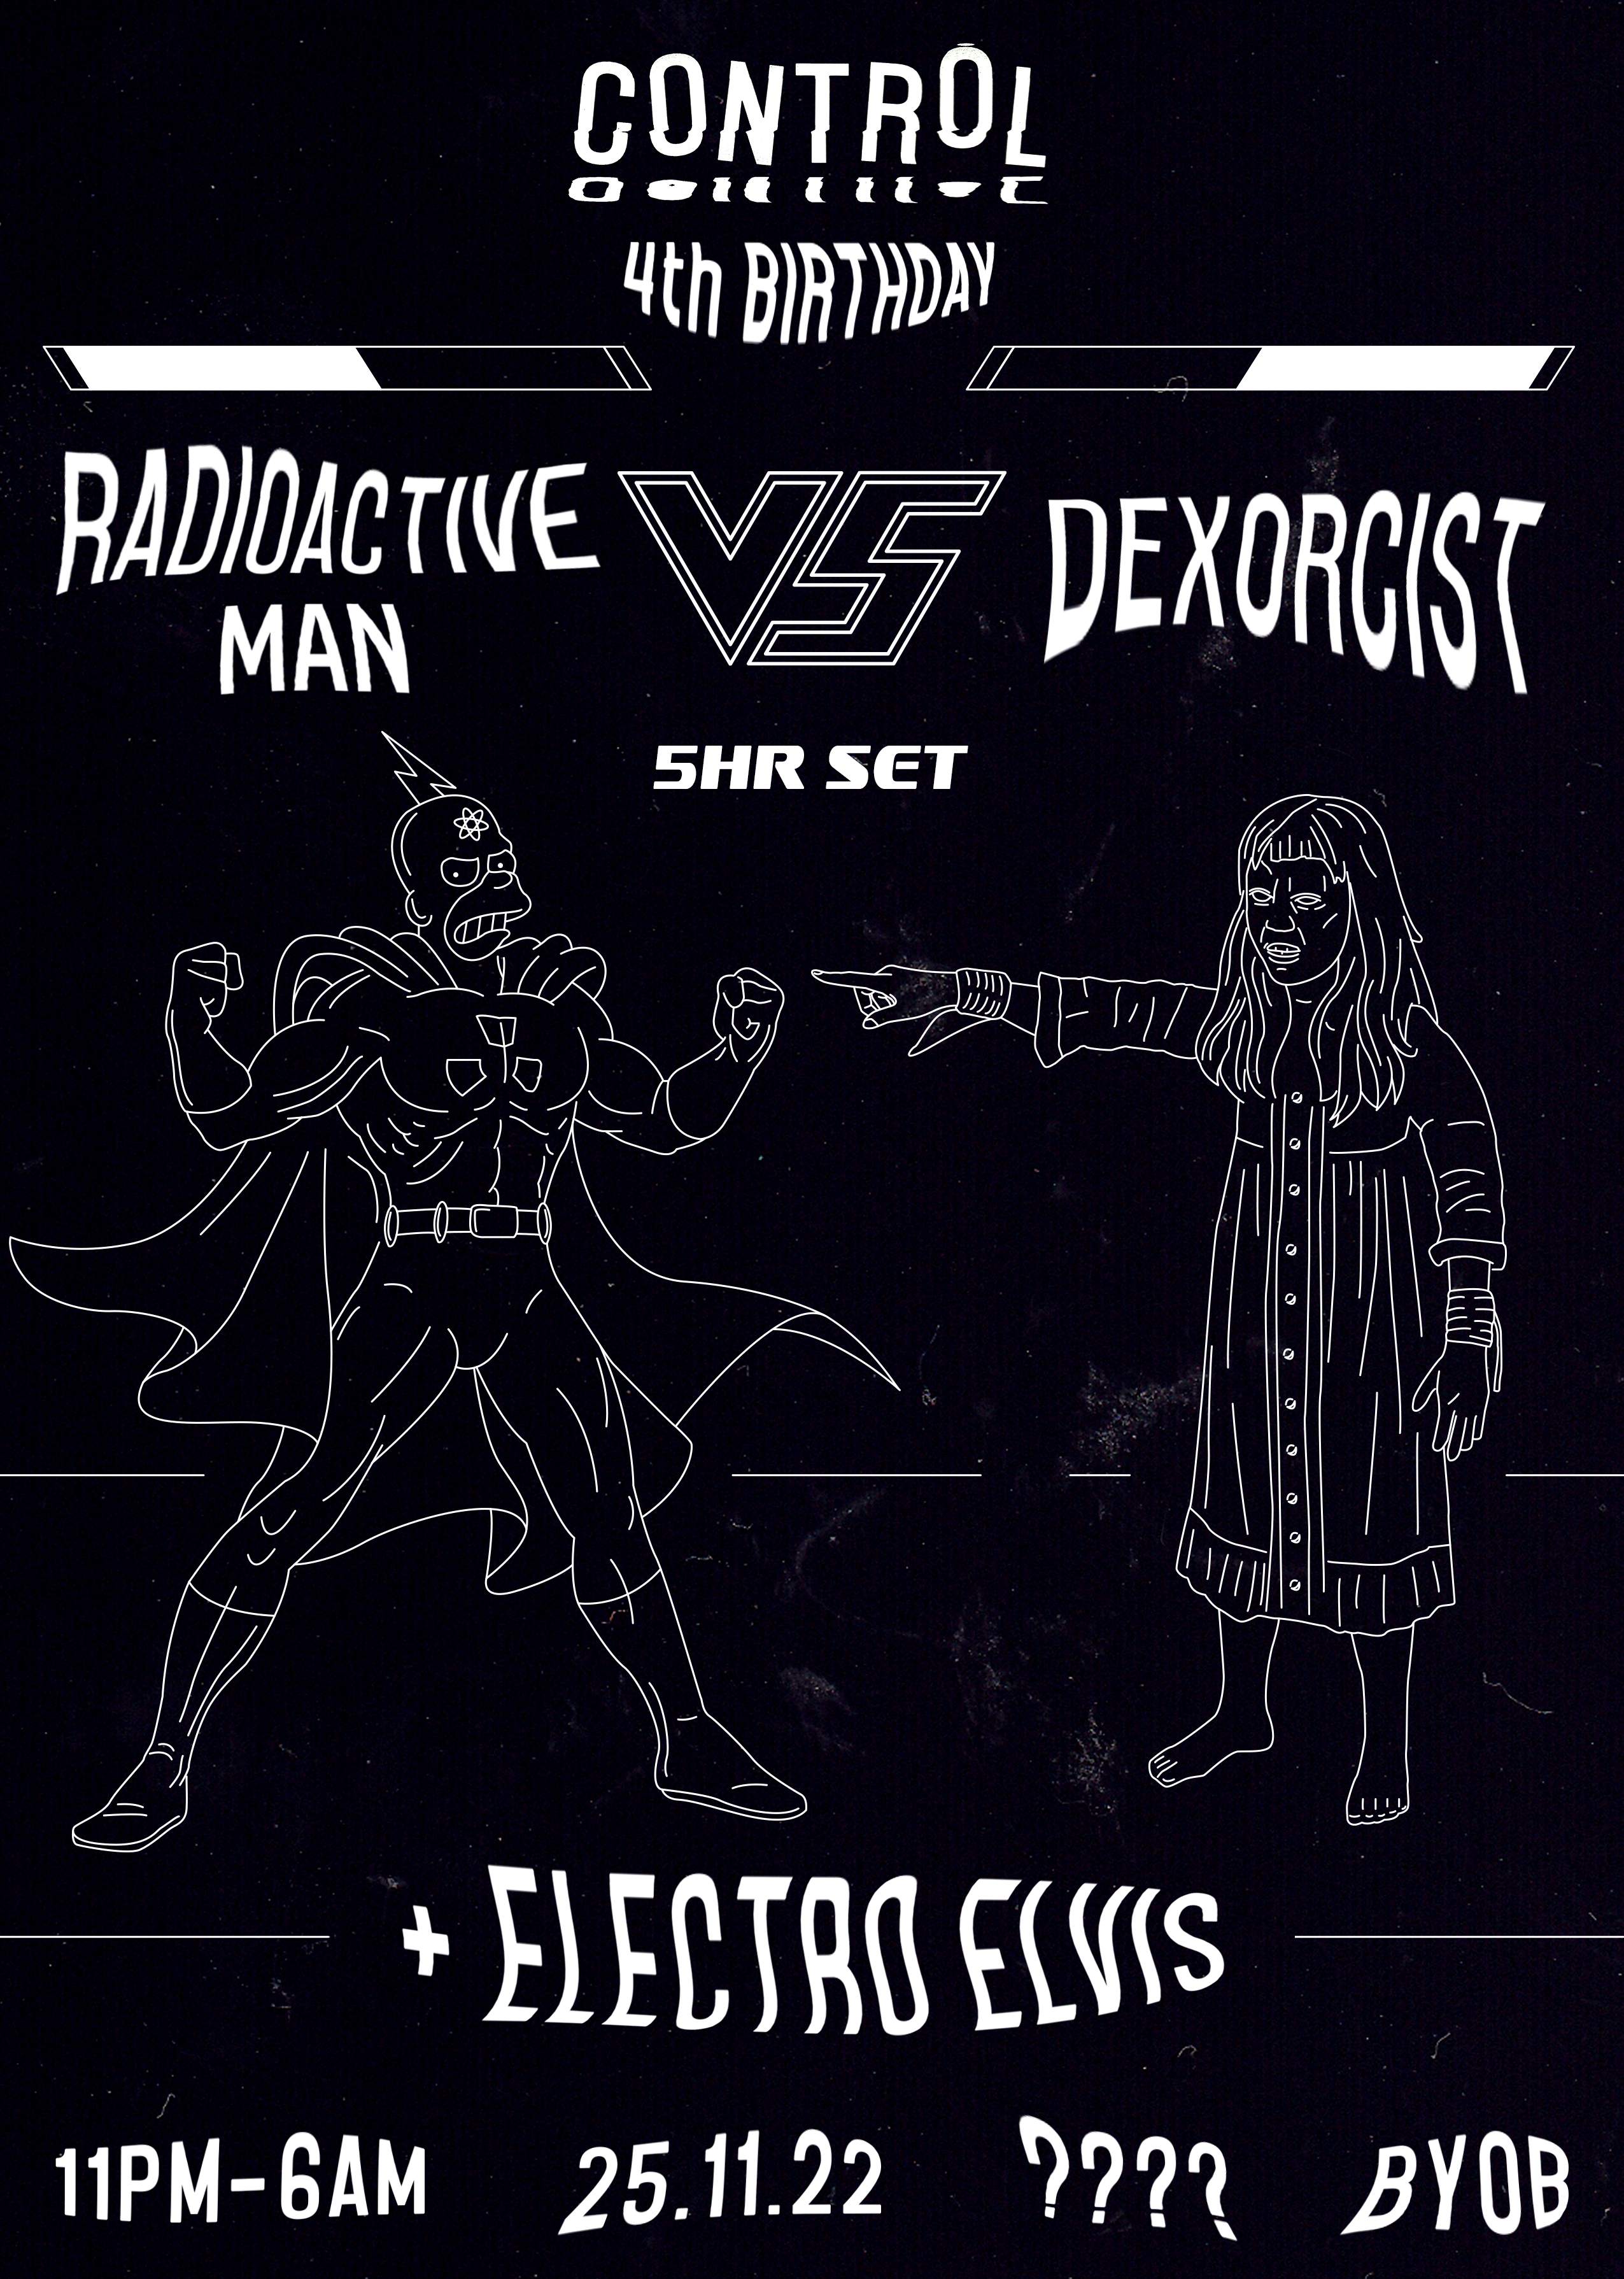 Control 4th Birthday. Radioactive Man B2B Dexorcist (5 hour set) + Electro Elvis - Página frontal